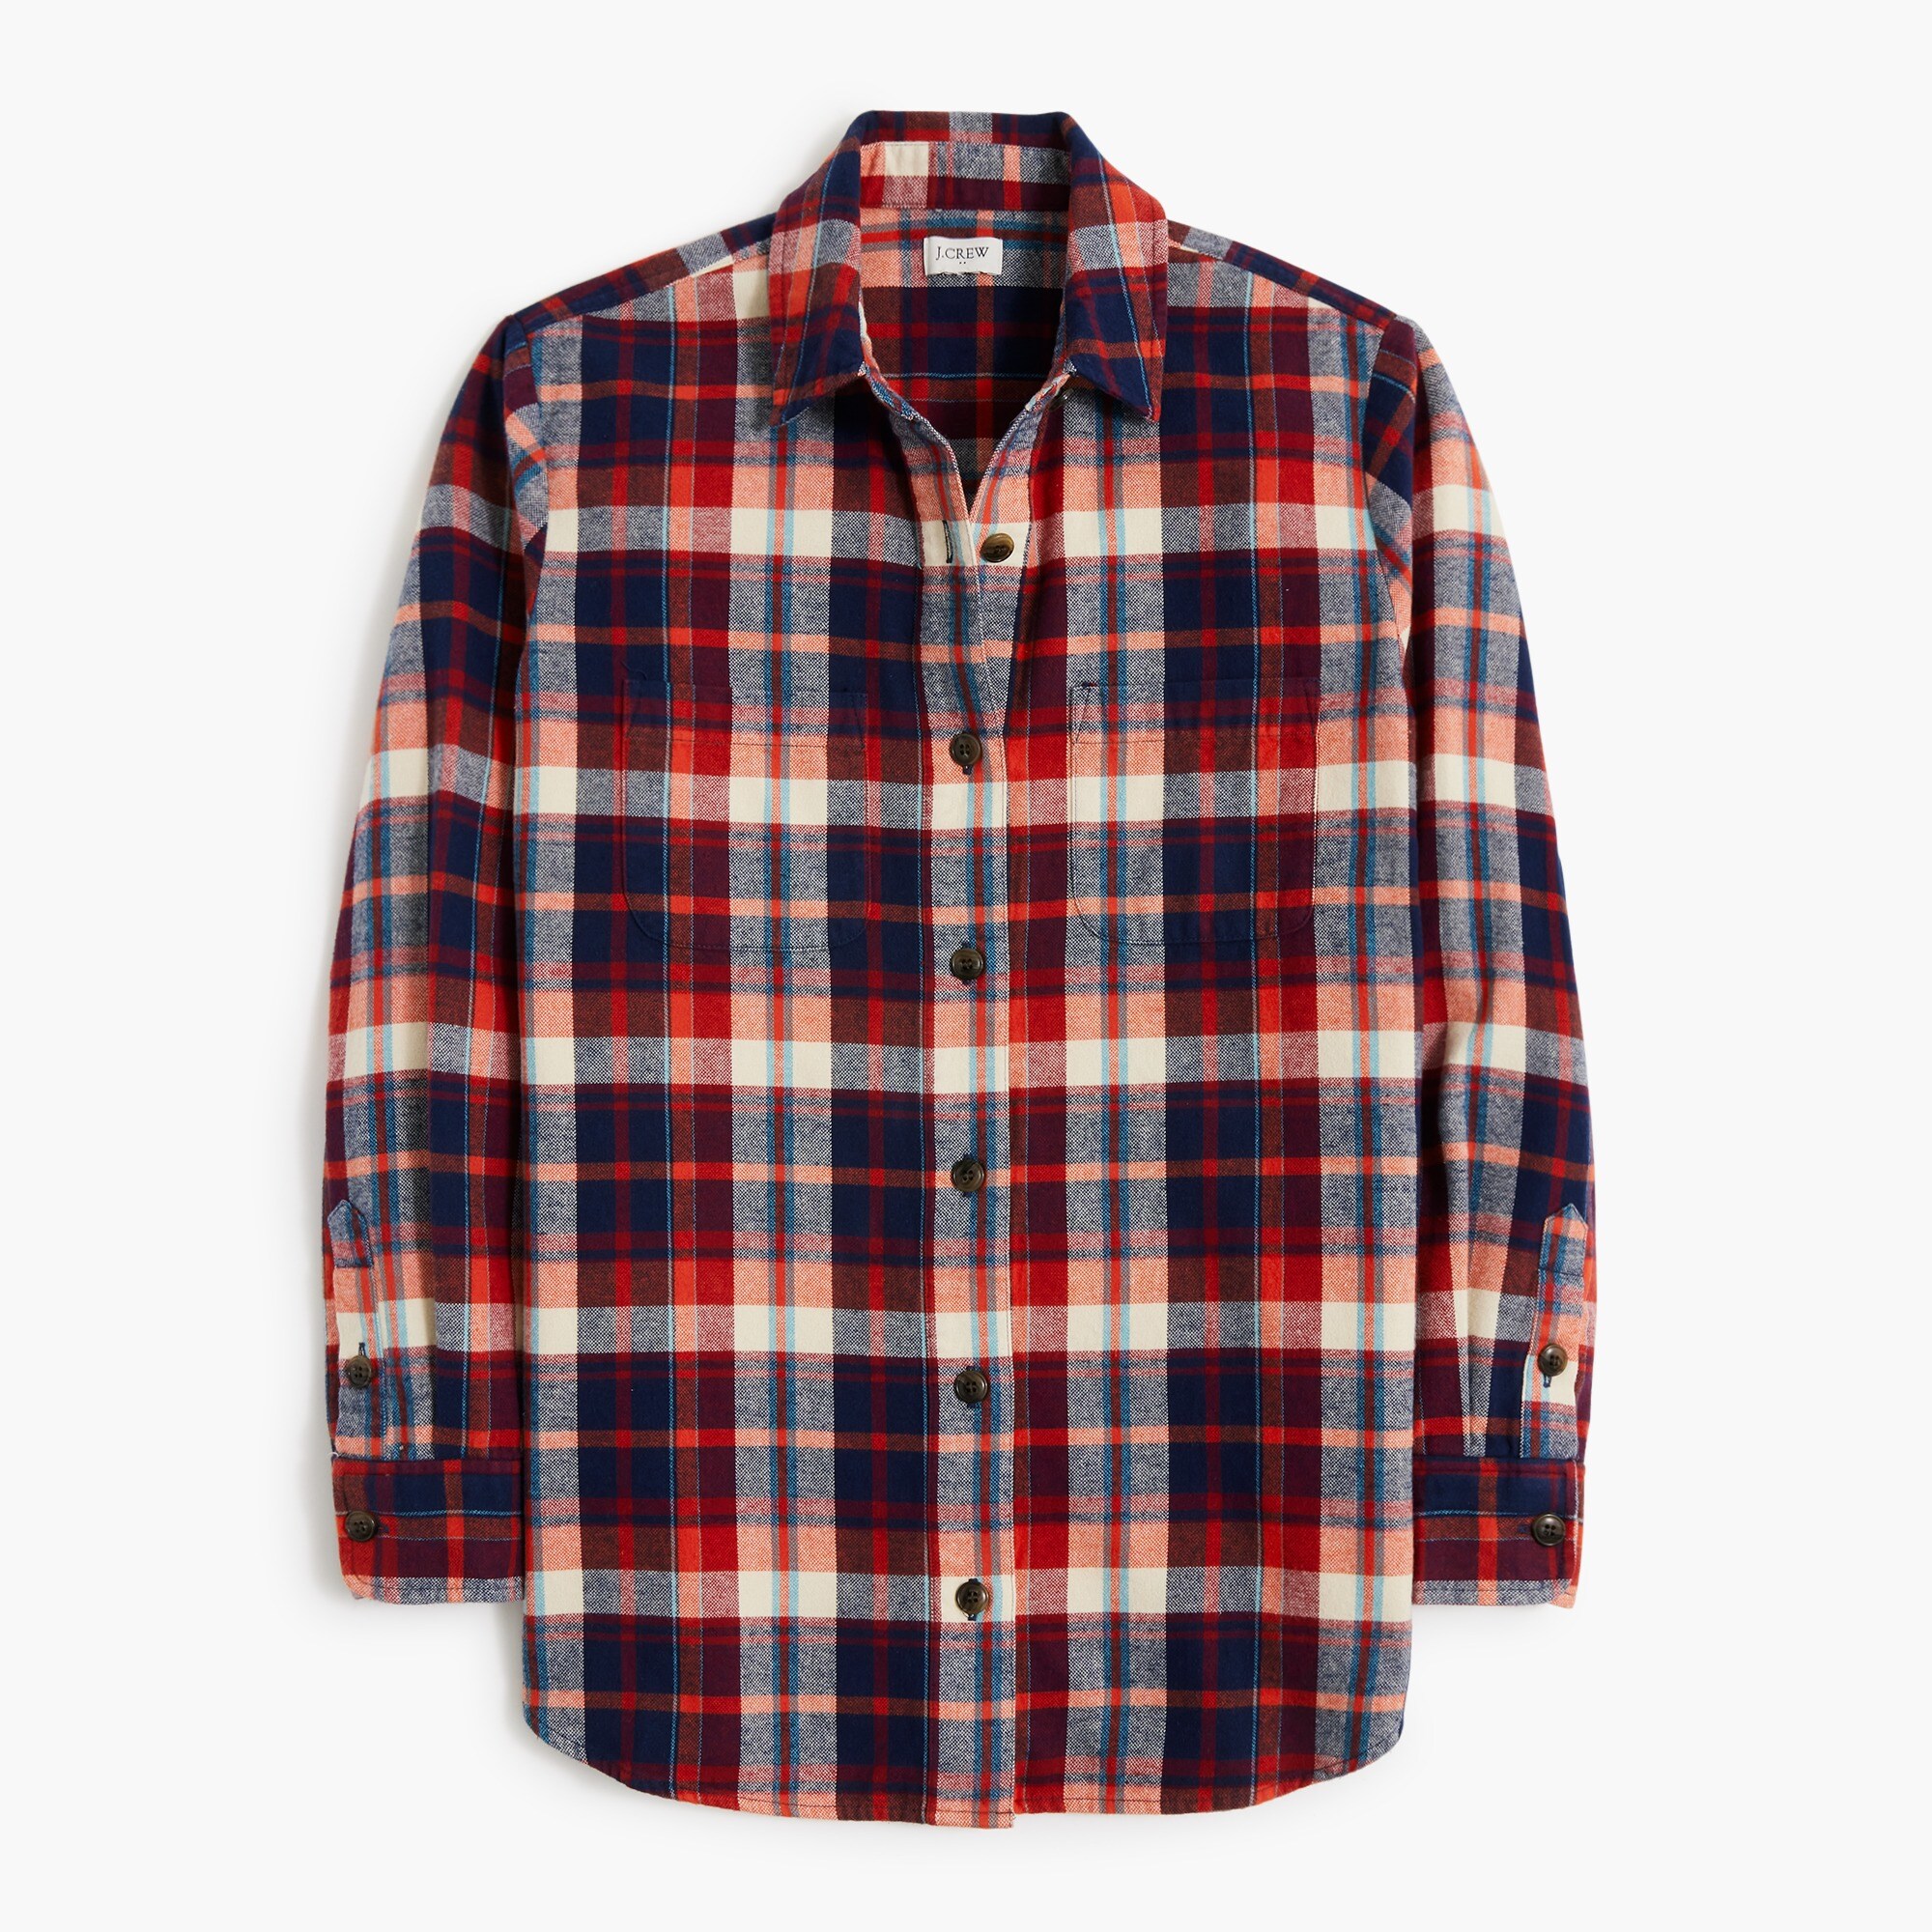  Petite flannel shirt-jacket